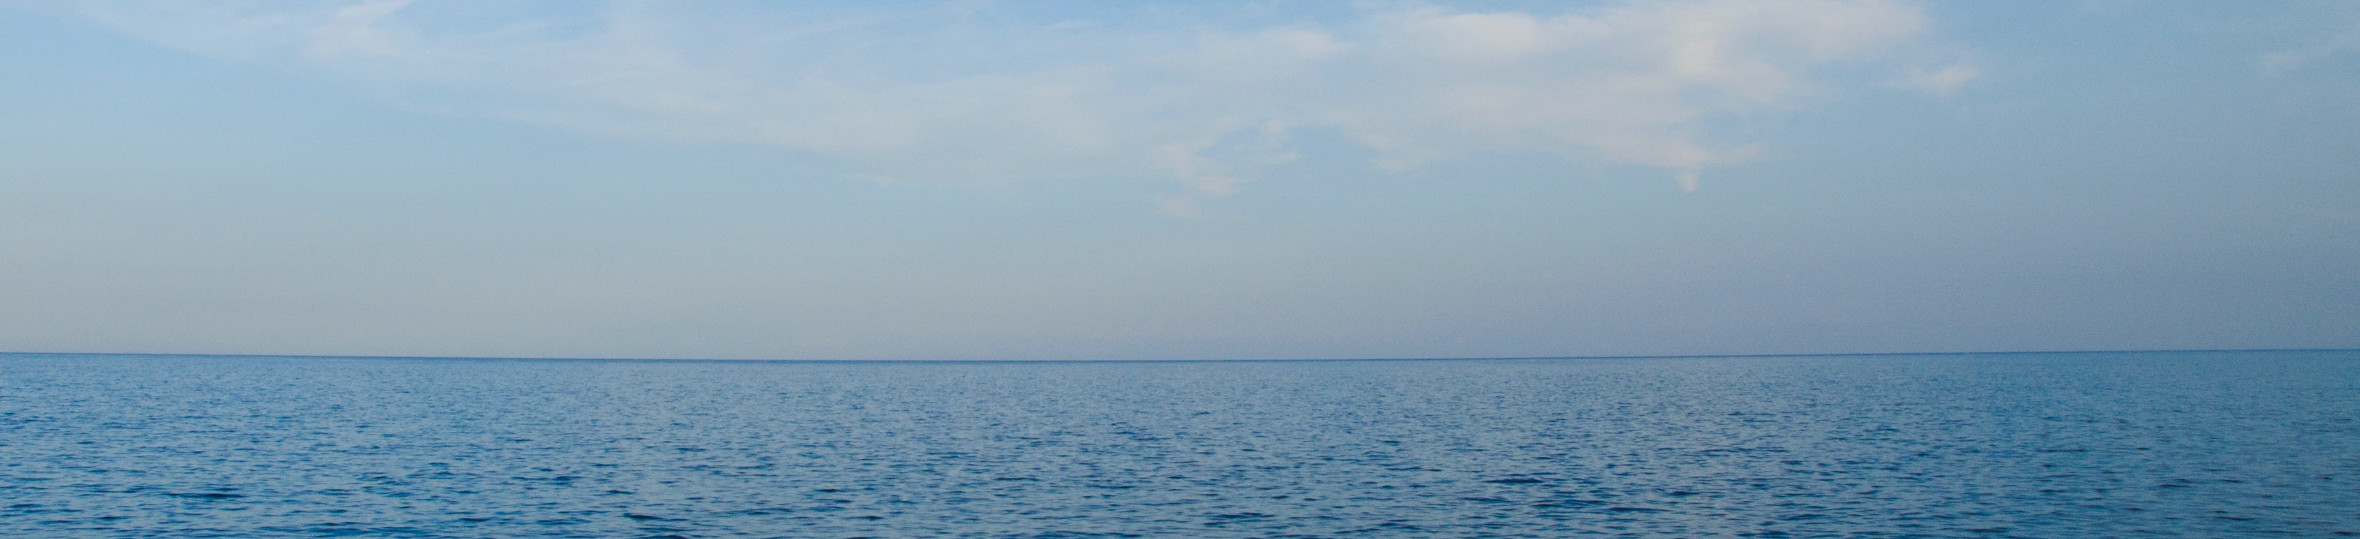 horizon-ocean-salt-water-7321.jpg